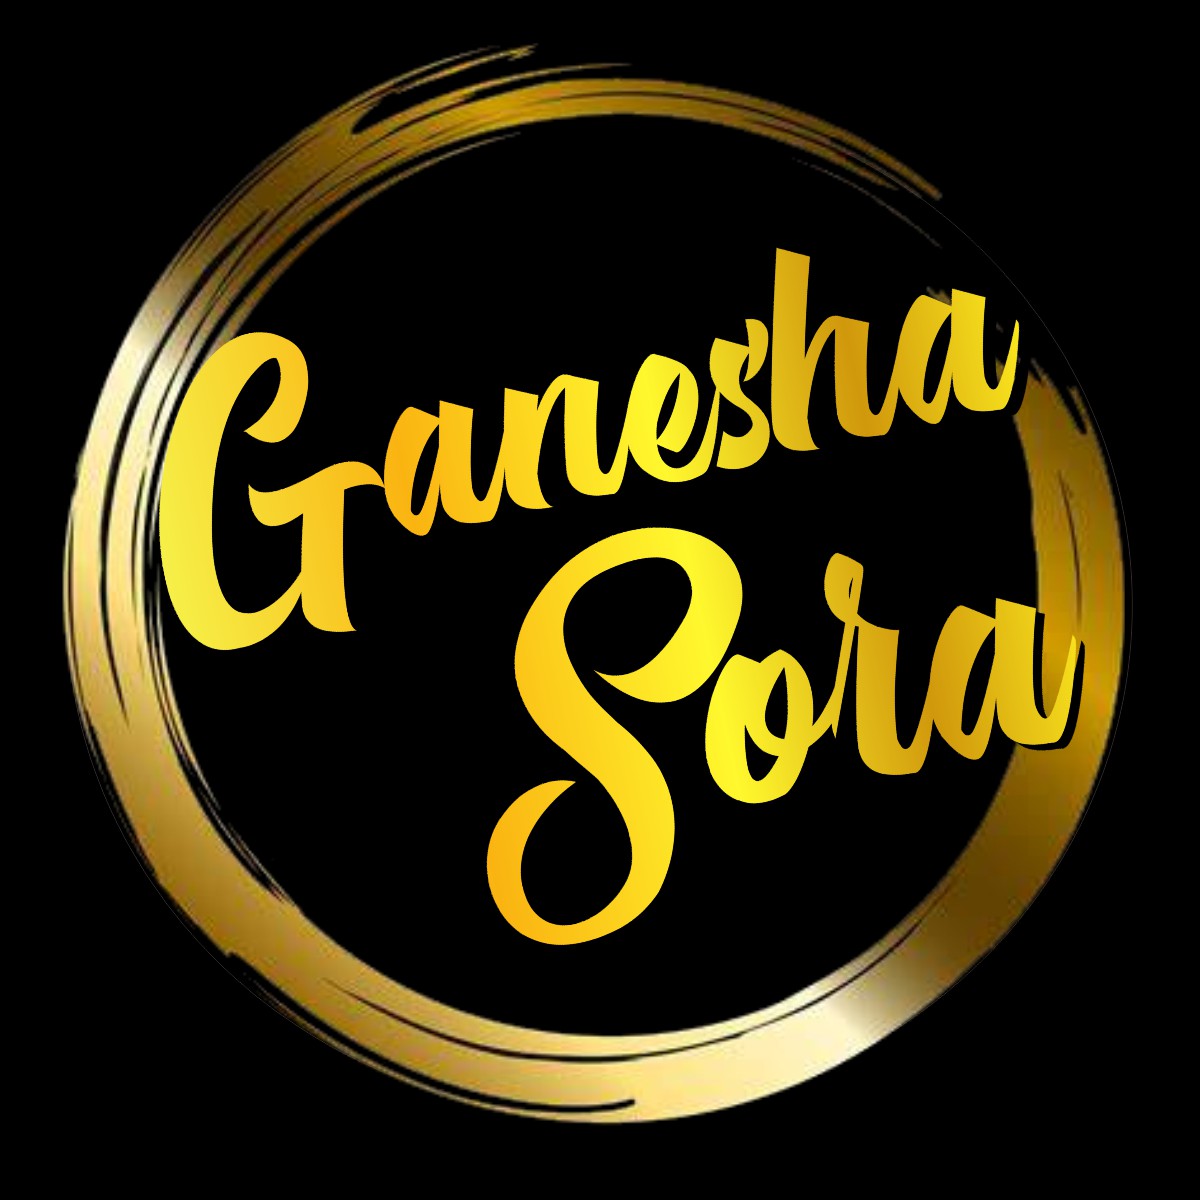 Ganesha Sora